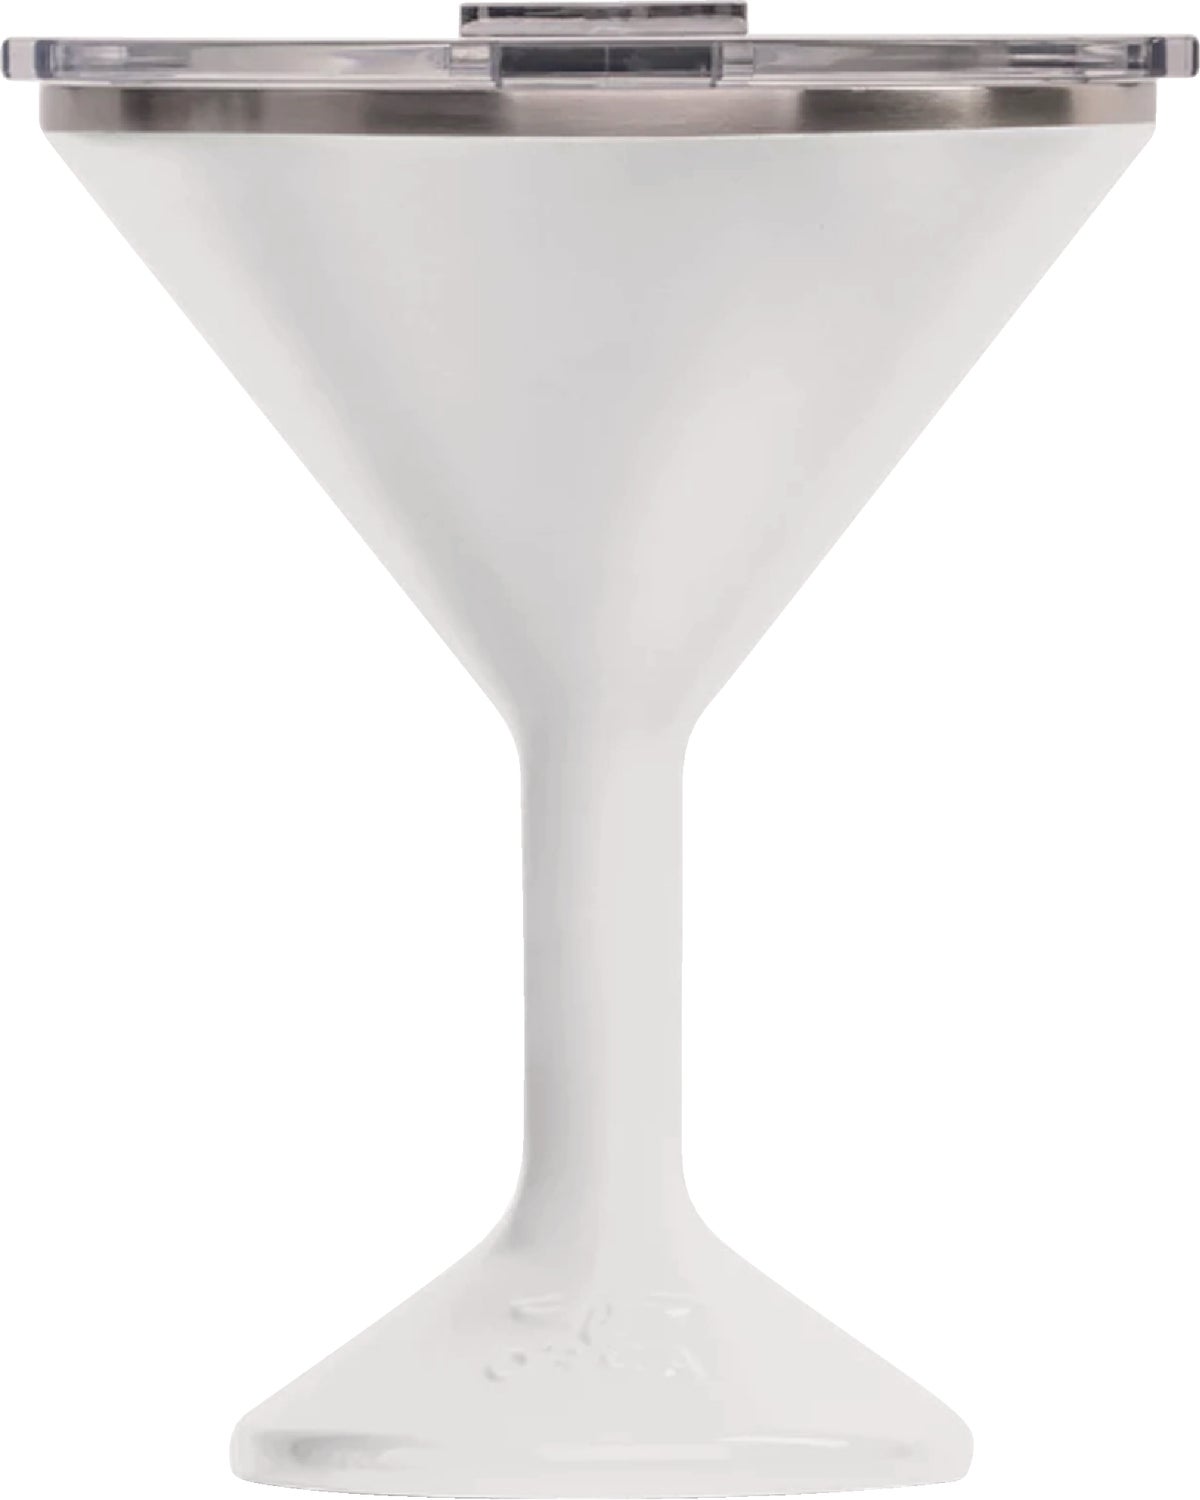 Orca ORCTINIBK 8 oz Tini Insulated Martini Glass, Black